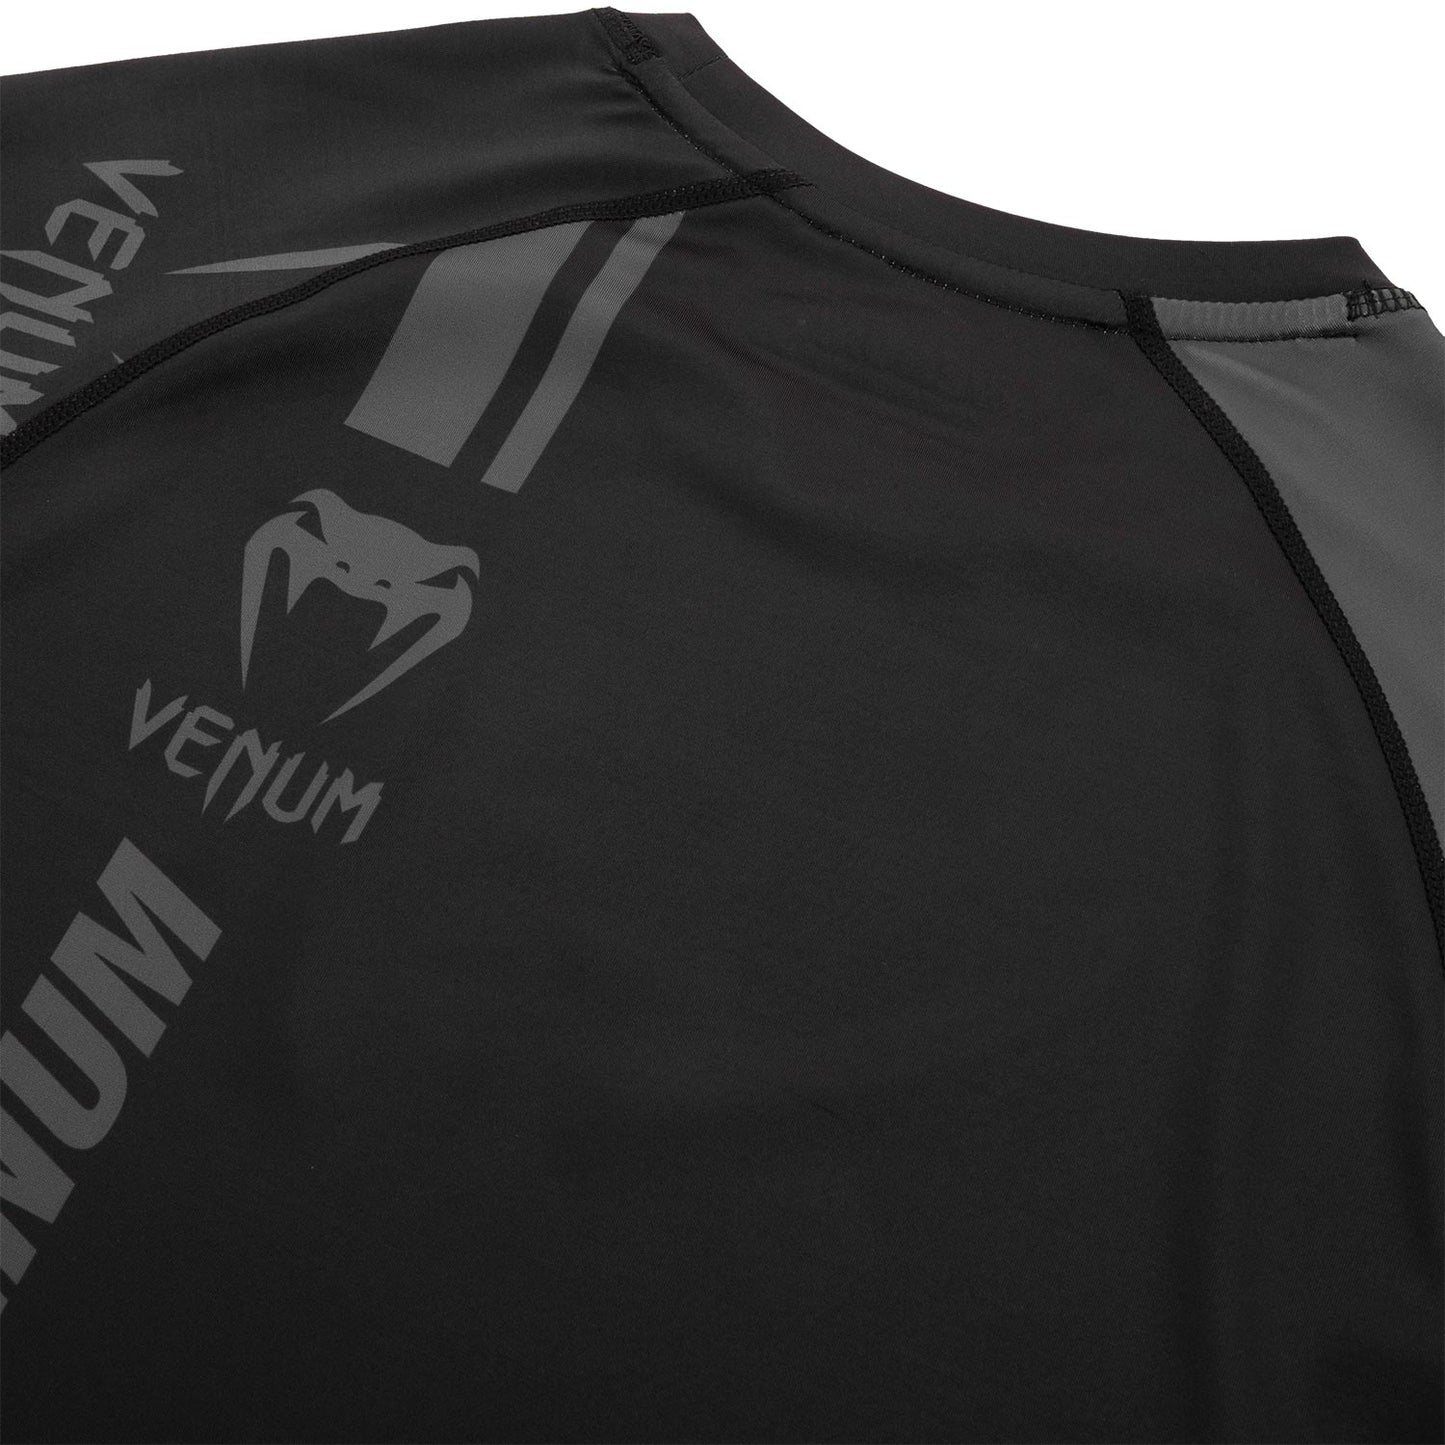 Venum Logos Rashguard - Short Sleeves - Black/Black